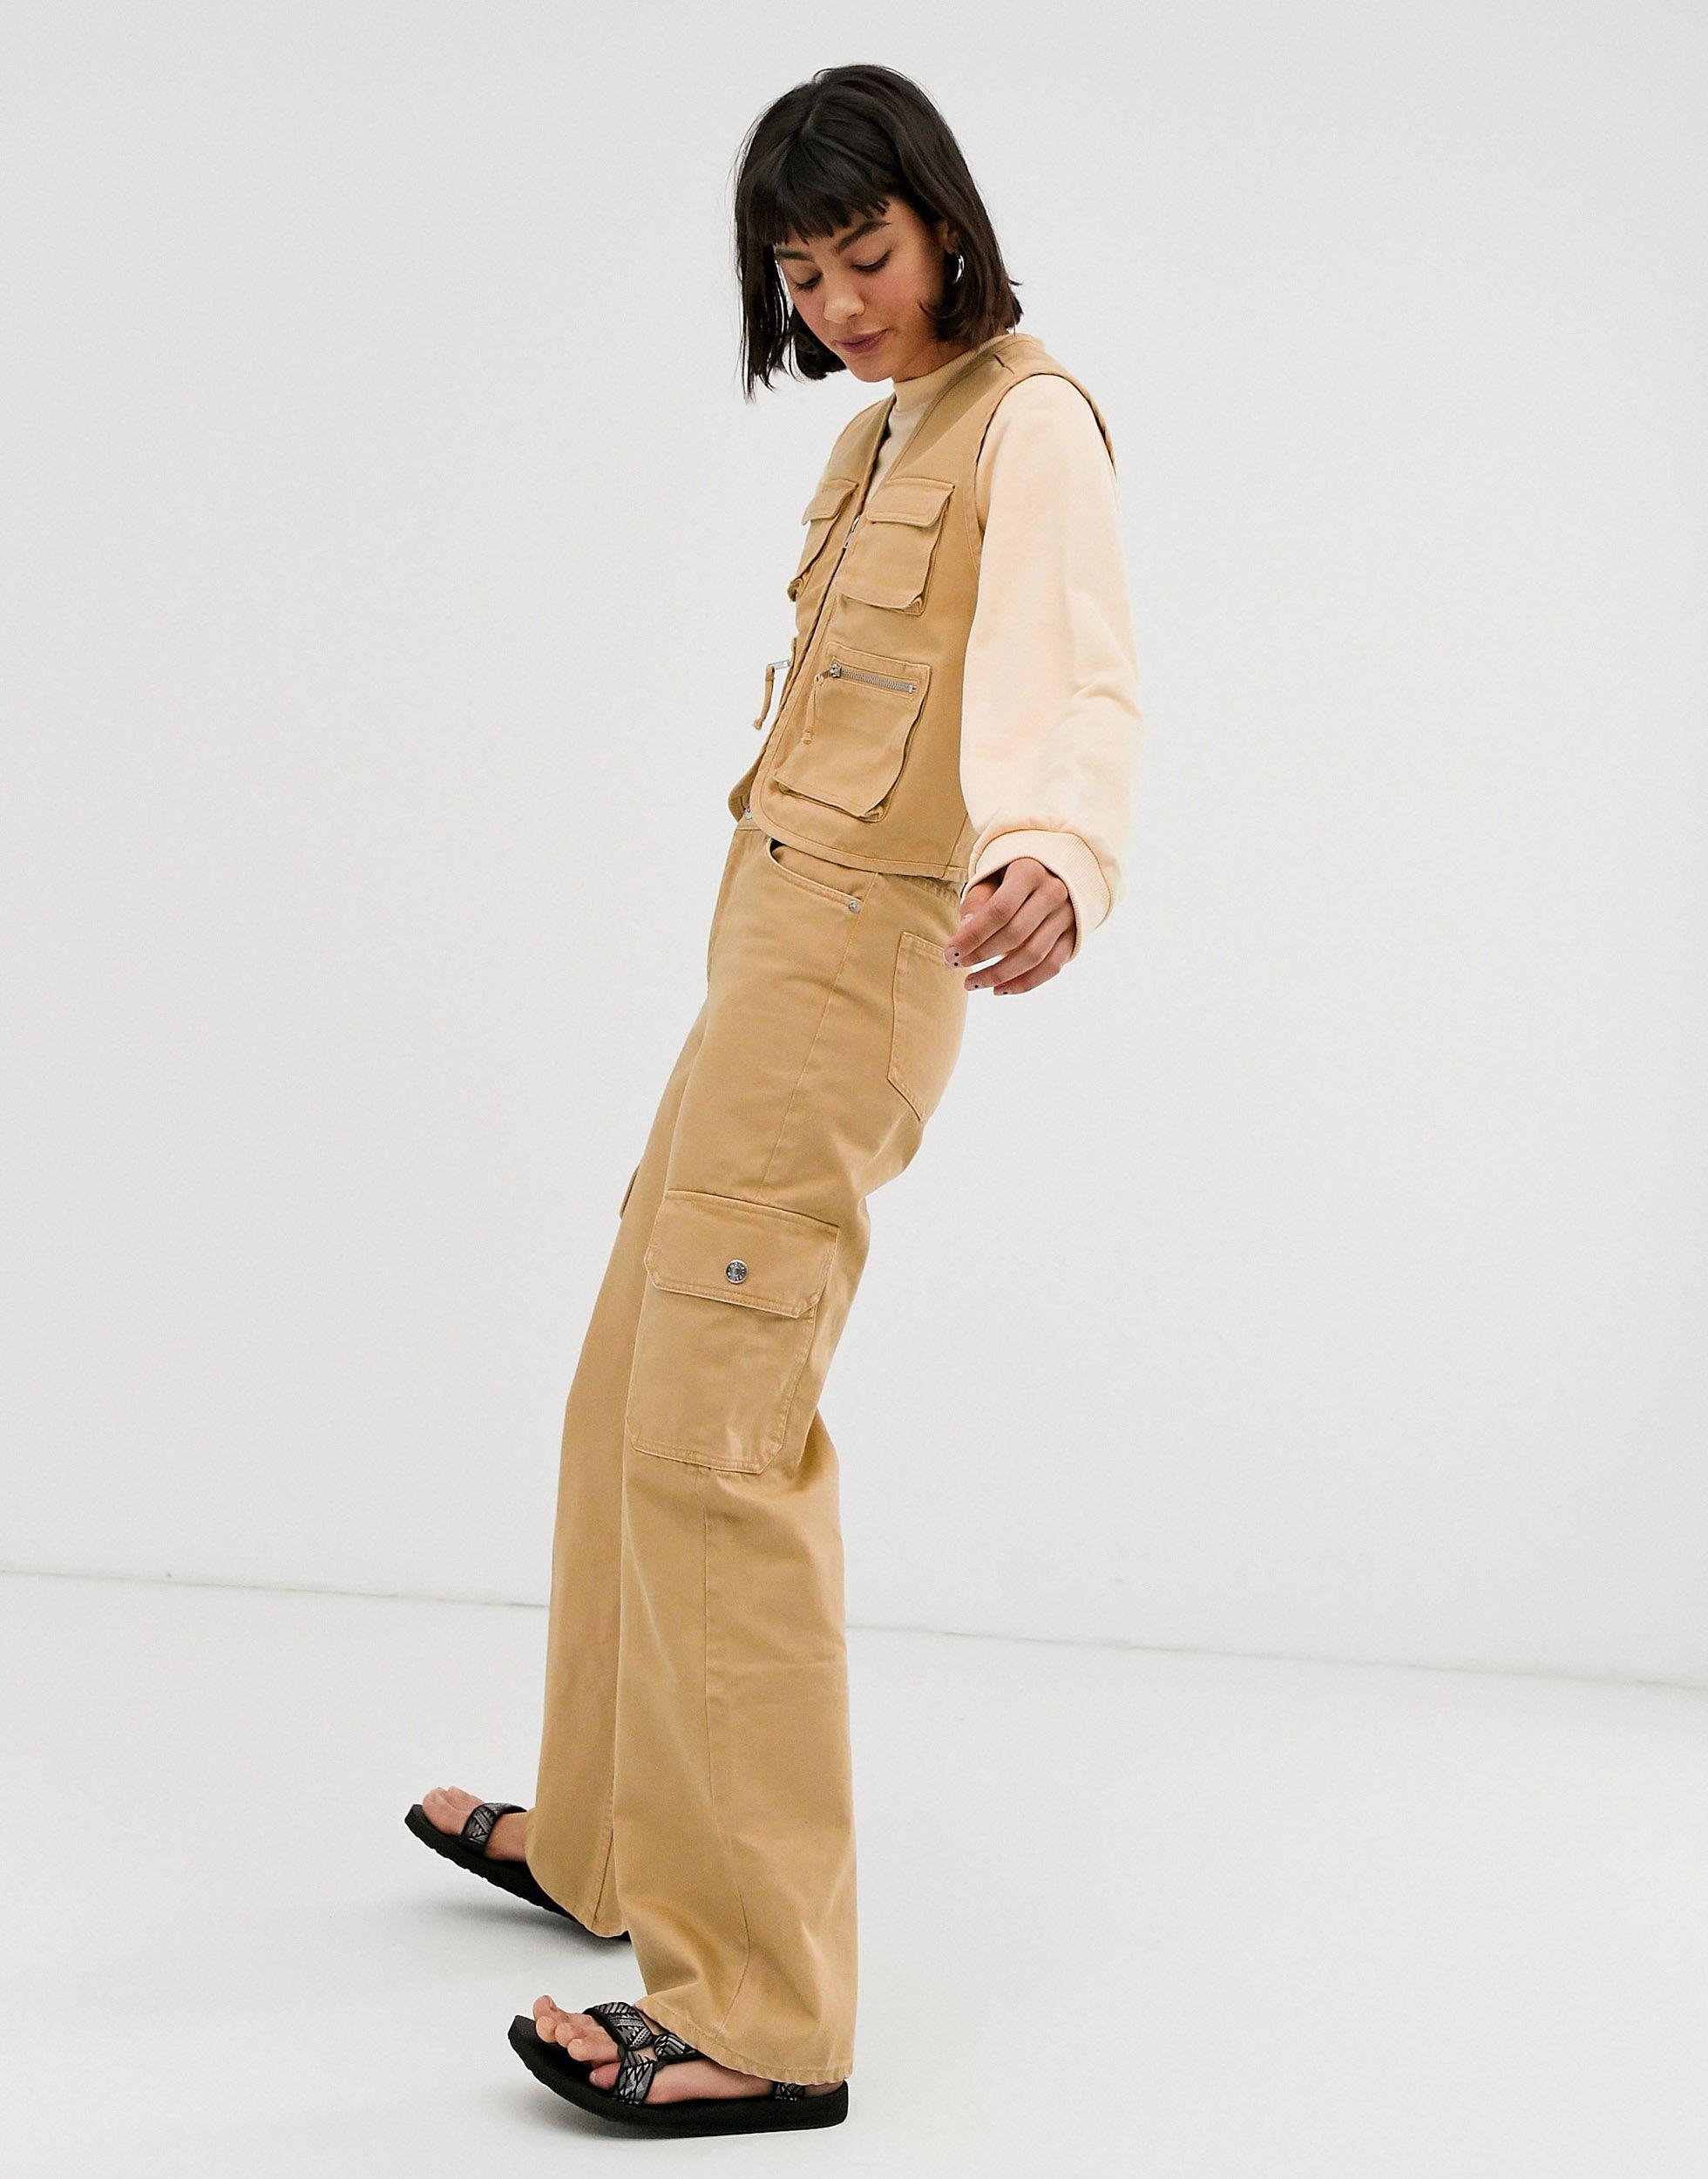 Monki Yoko Organic Cotton Wide-leg Utility Jeans in Beige (Natural) - Lyst